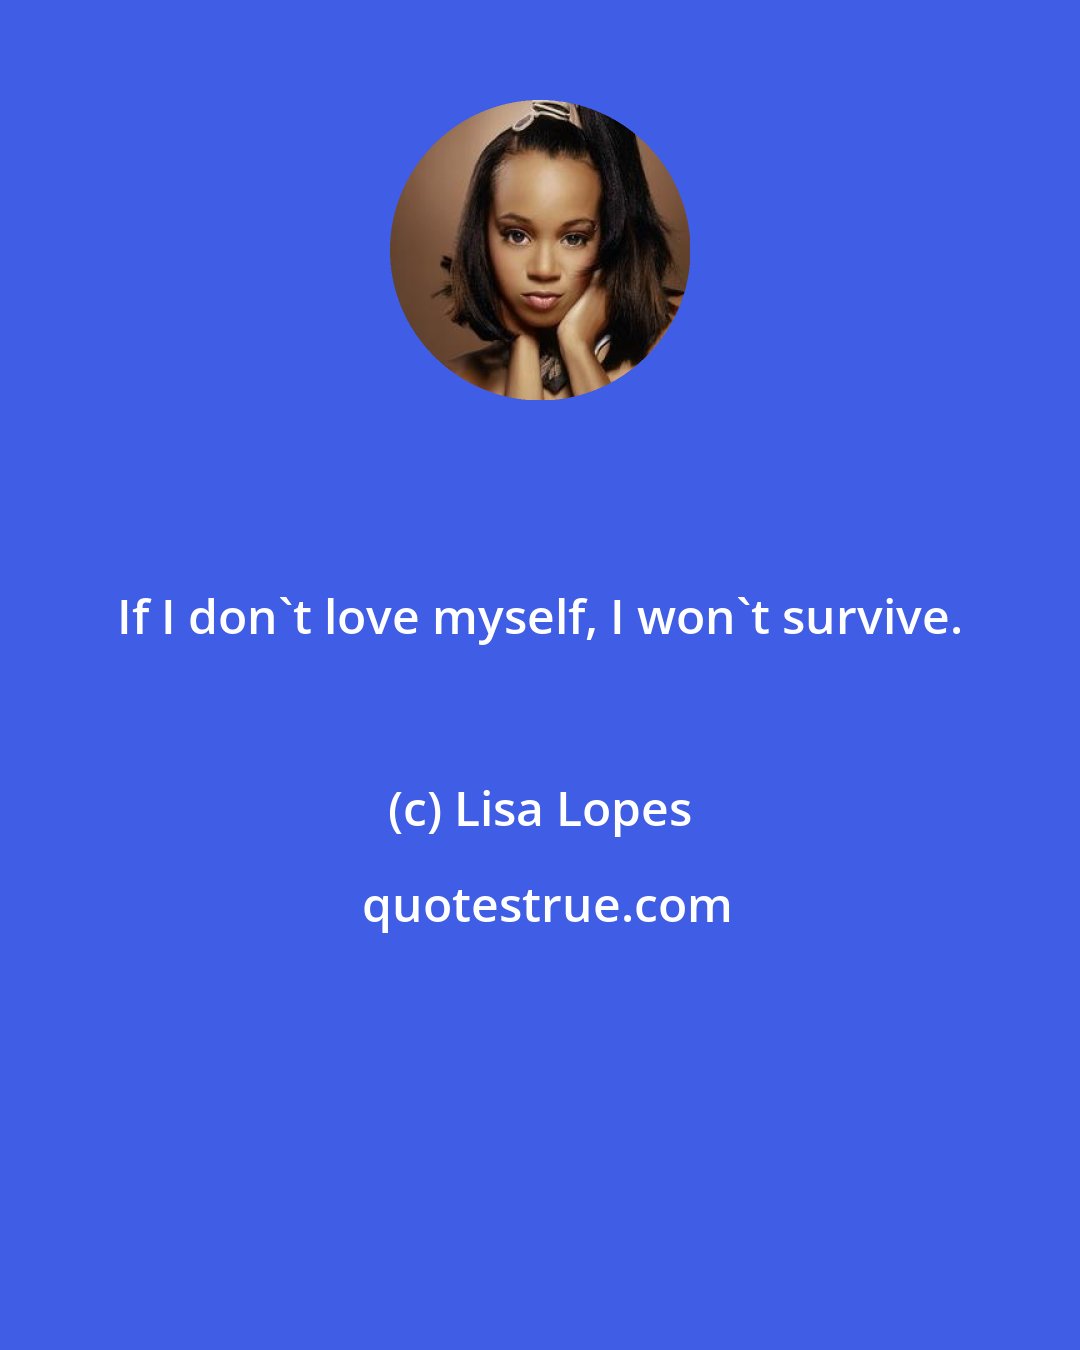 Lisa Lopes: If I don't love myself, I won't survive.